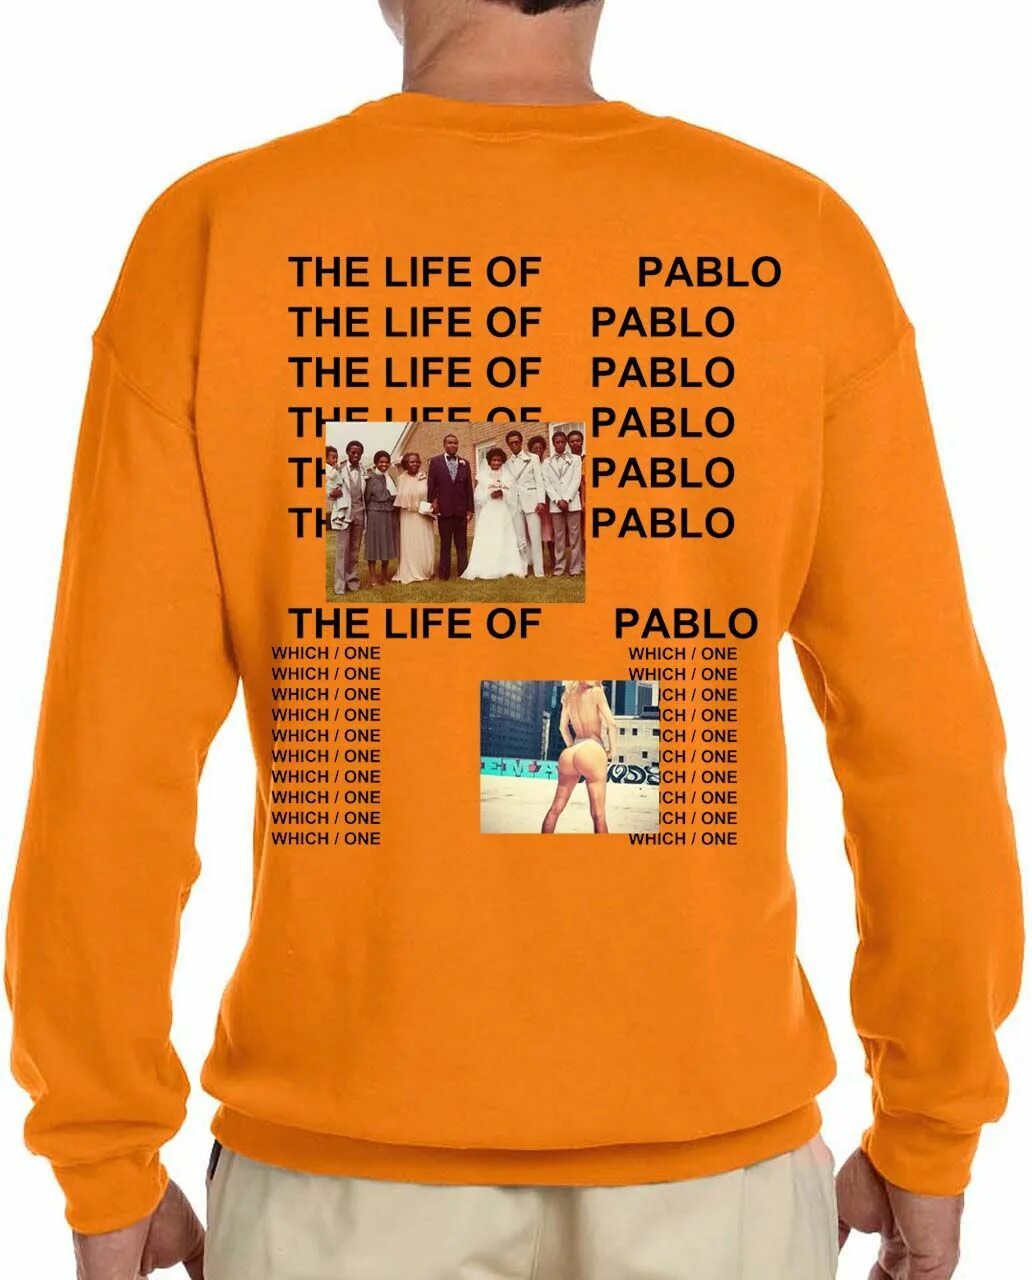 The life of pablo. Kanye Life of Pablo. Мерч Pablo Pablo Pablo Pablo. The Life of Pablo мерч. Kanye West the Life of Pablo.